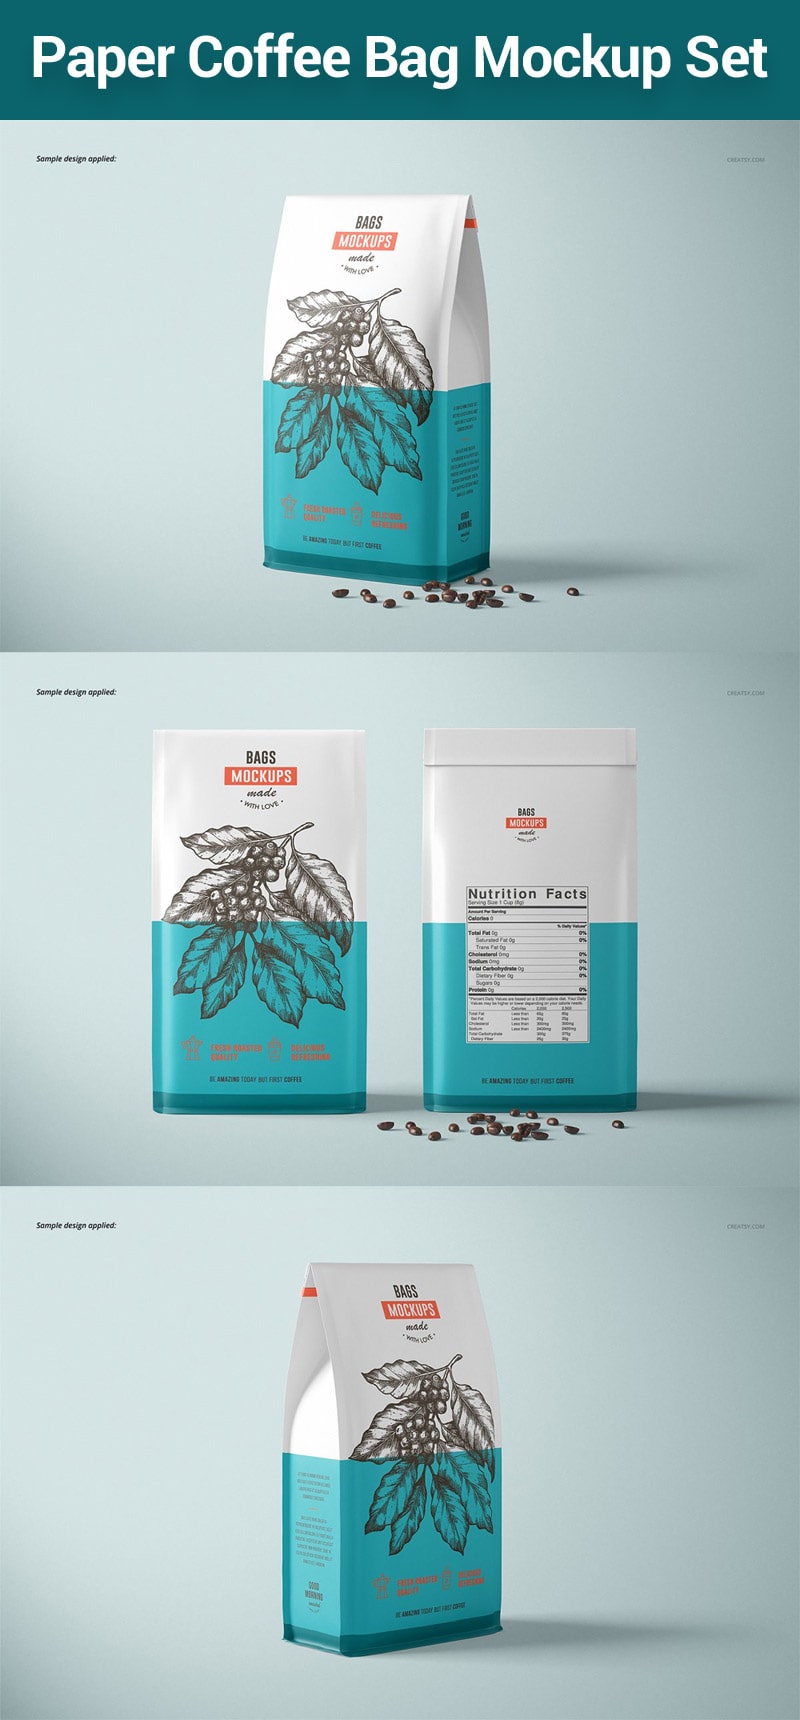 Download 21+ Realistic Coffee Bag Mockups PSD Templates - Mockups ...